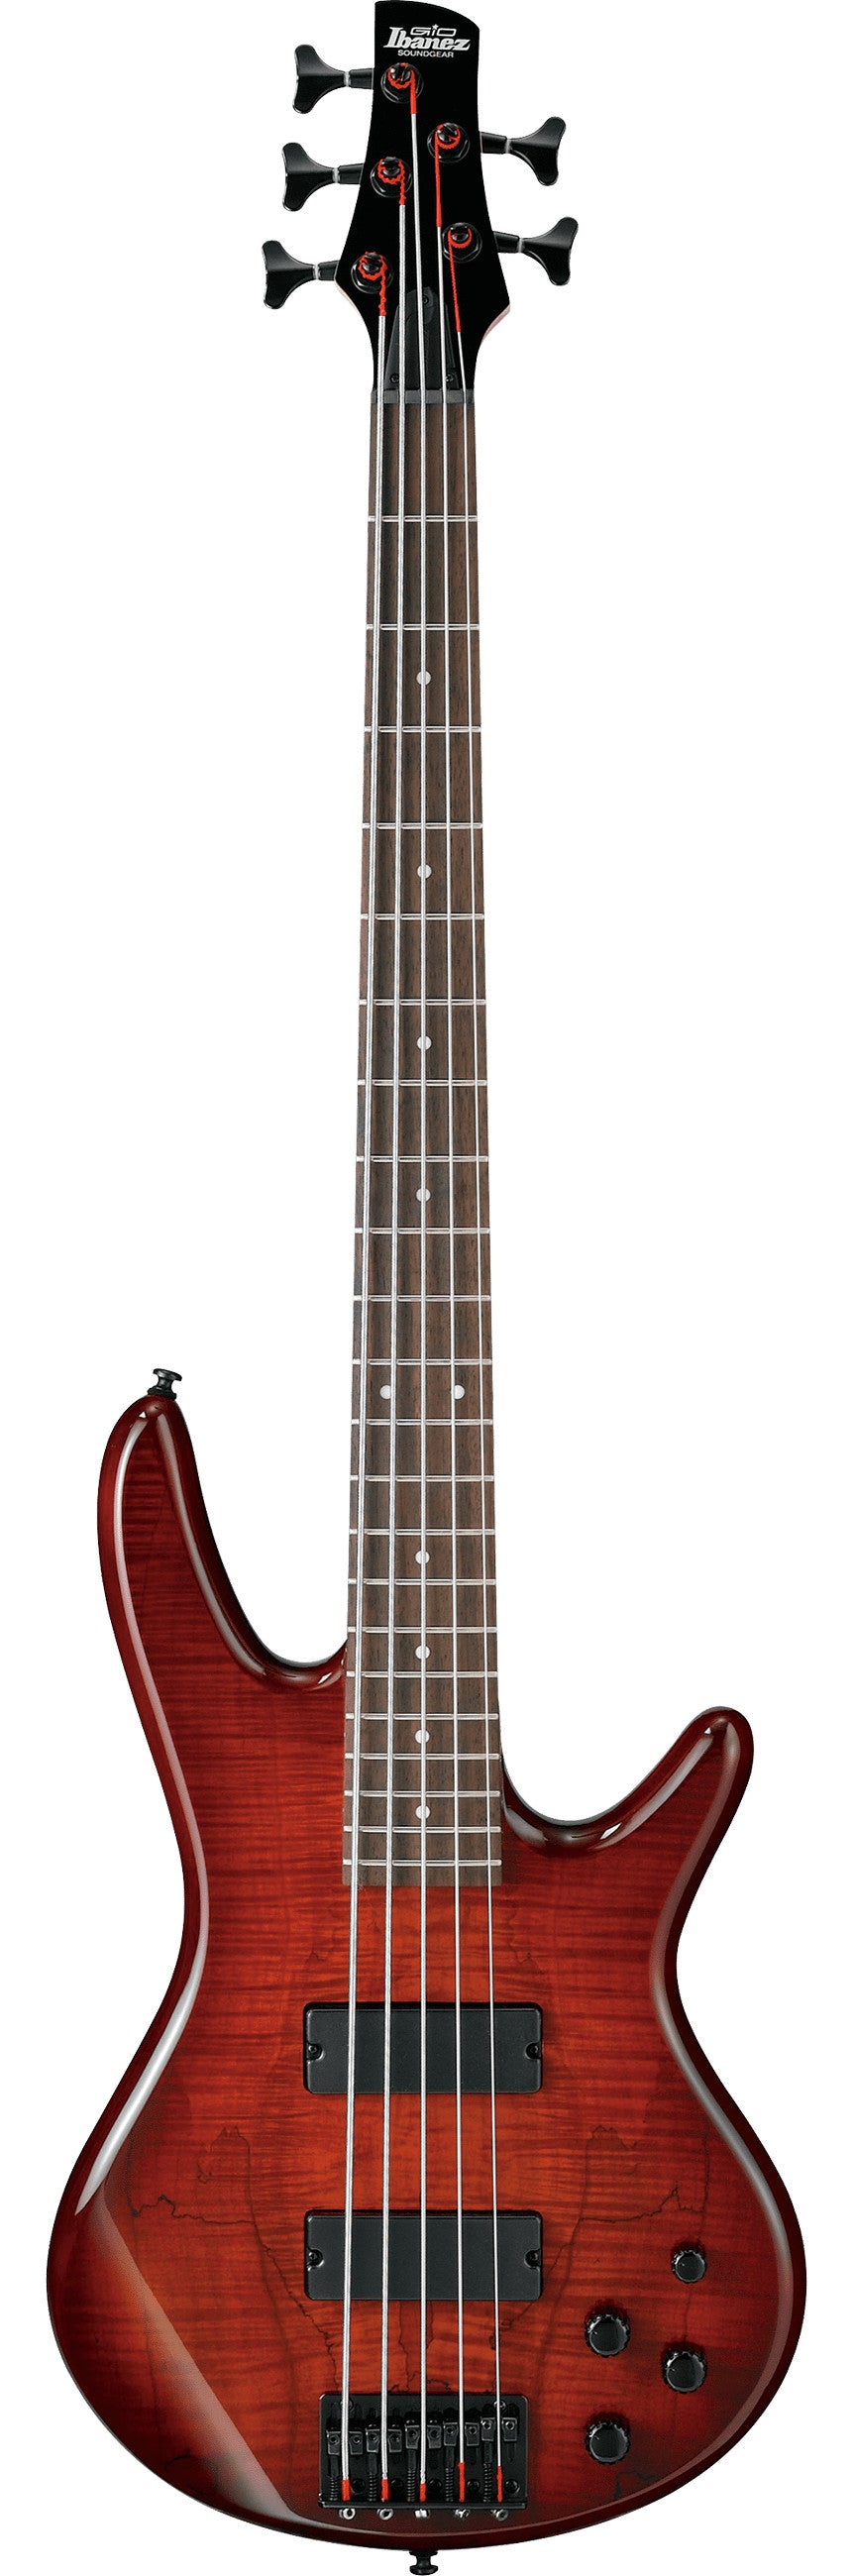 Ibanez Gio GSR205SM-CNB 5 String Bass - Charcoal Brown Burst